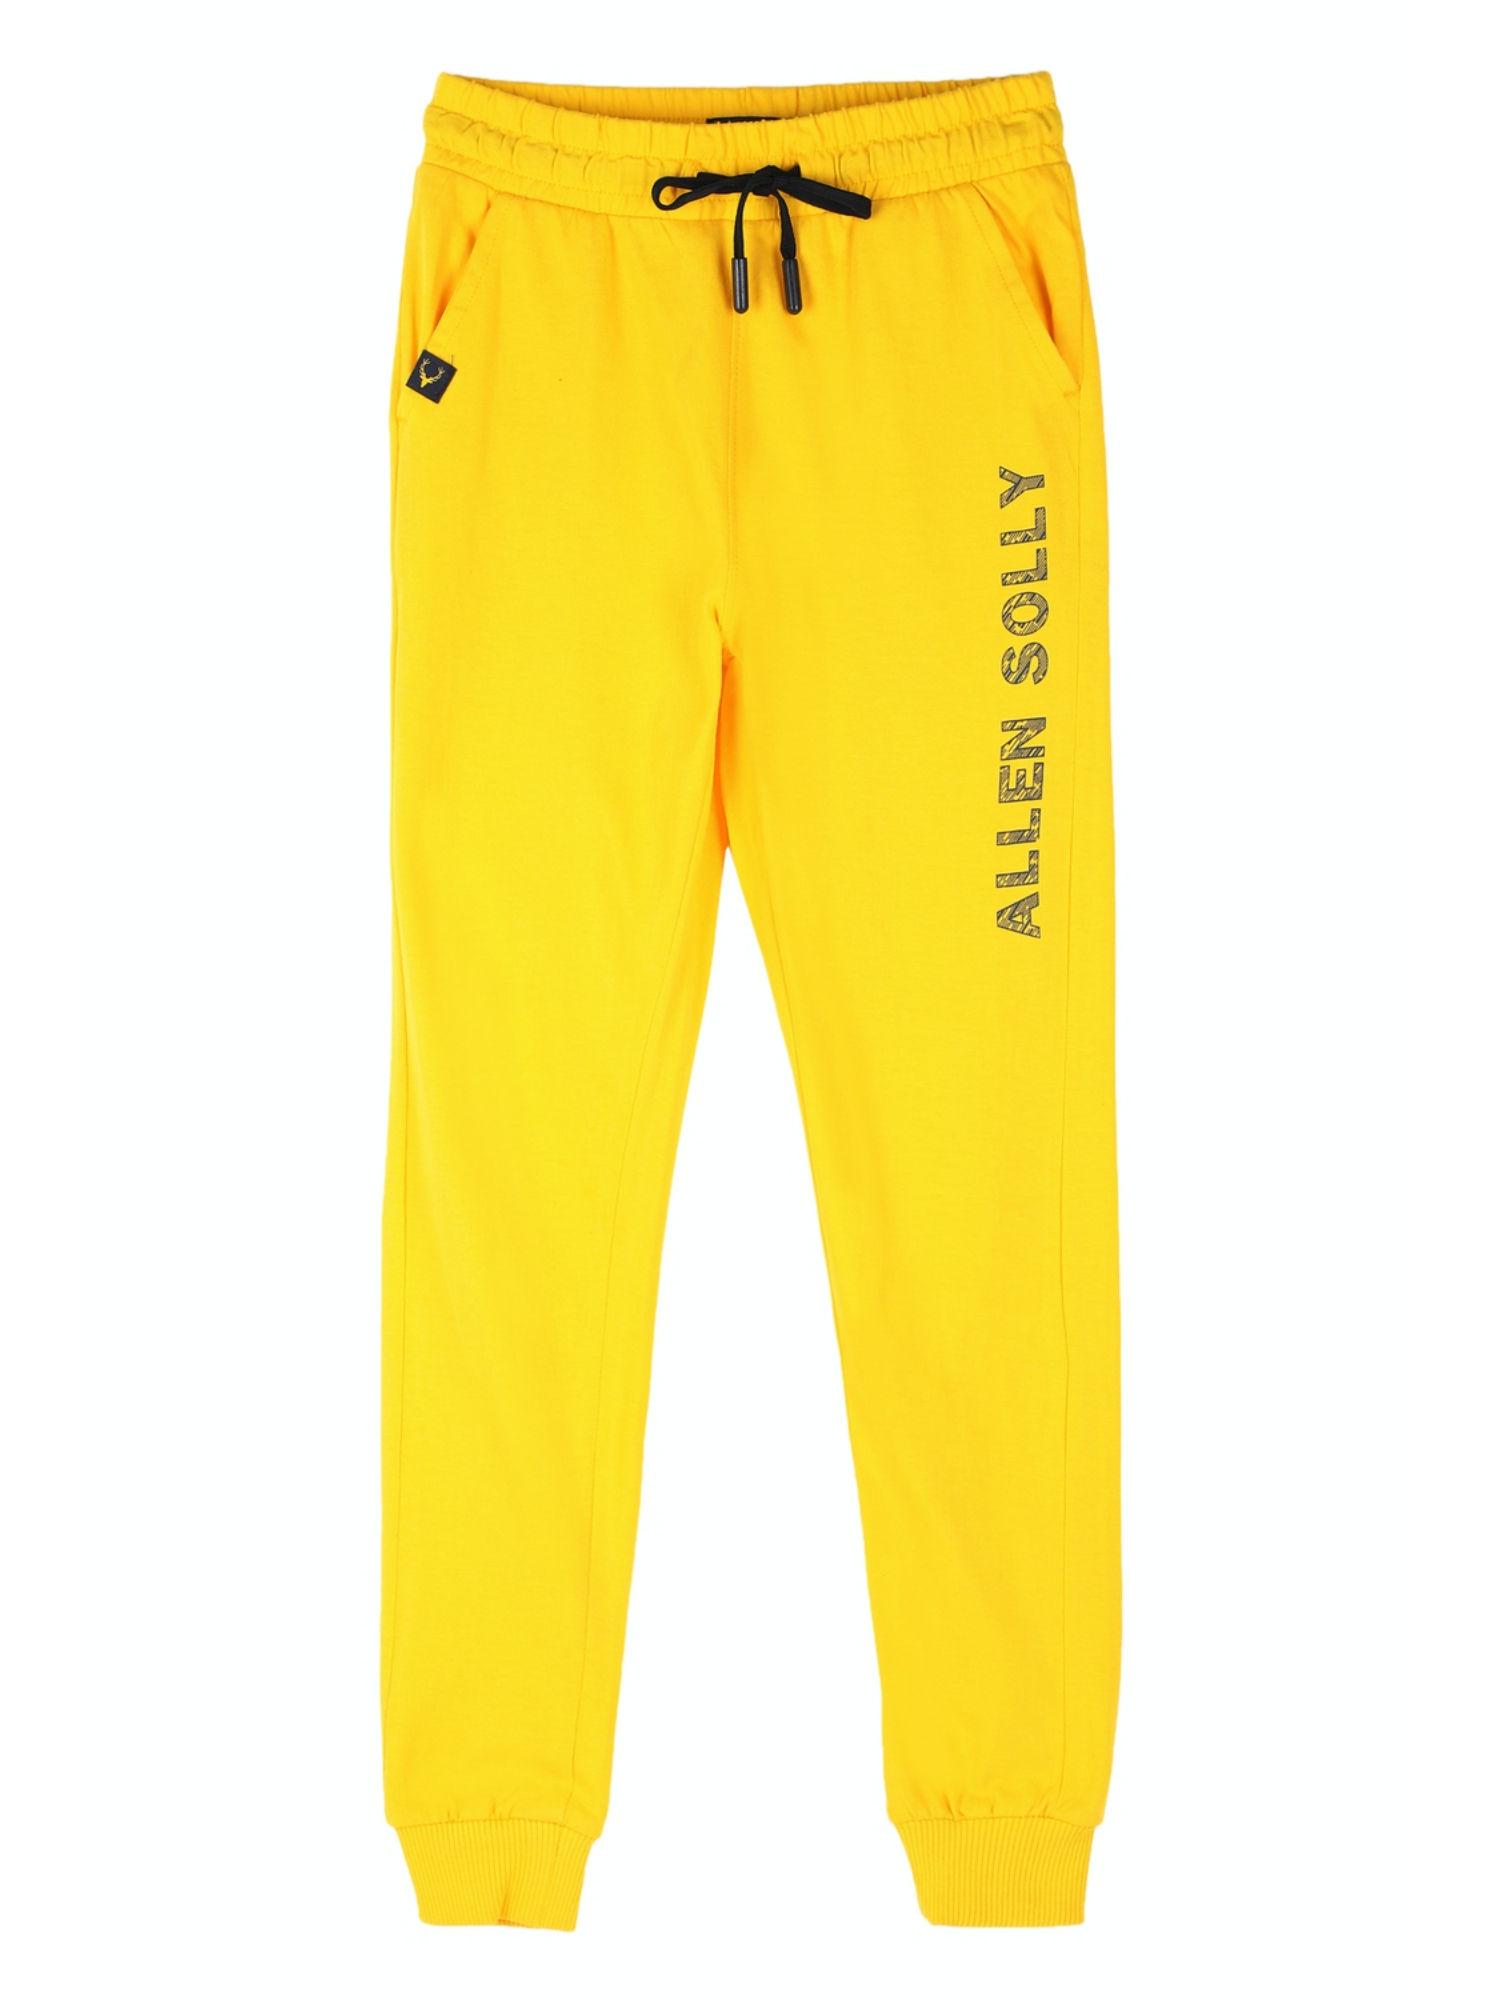 yellow-track-pants